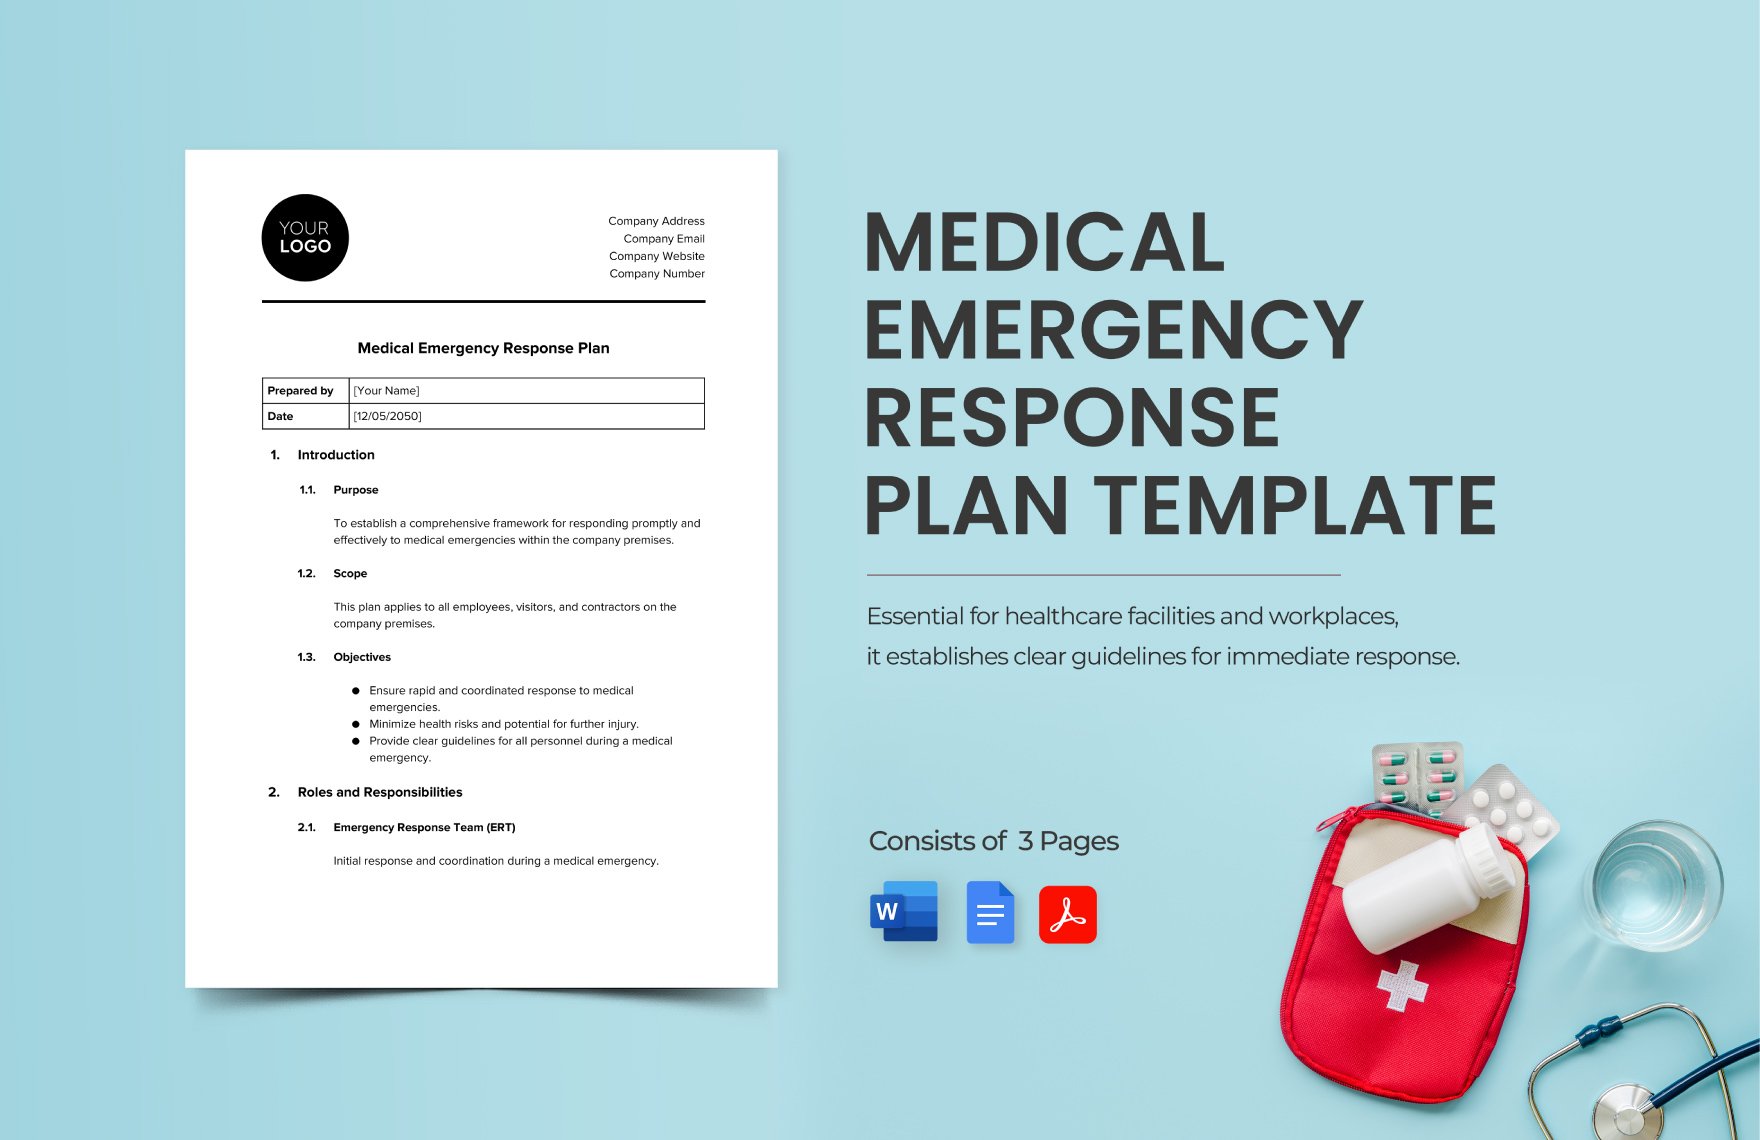 Medical Emergency Response Plan Template in Word, Google Docs, PDF